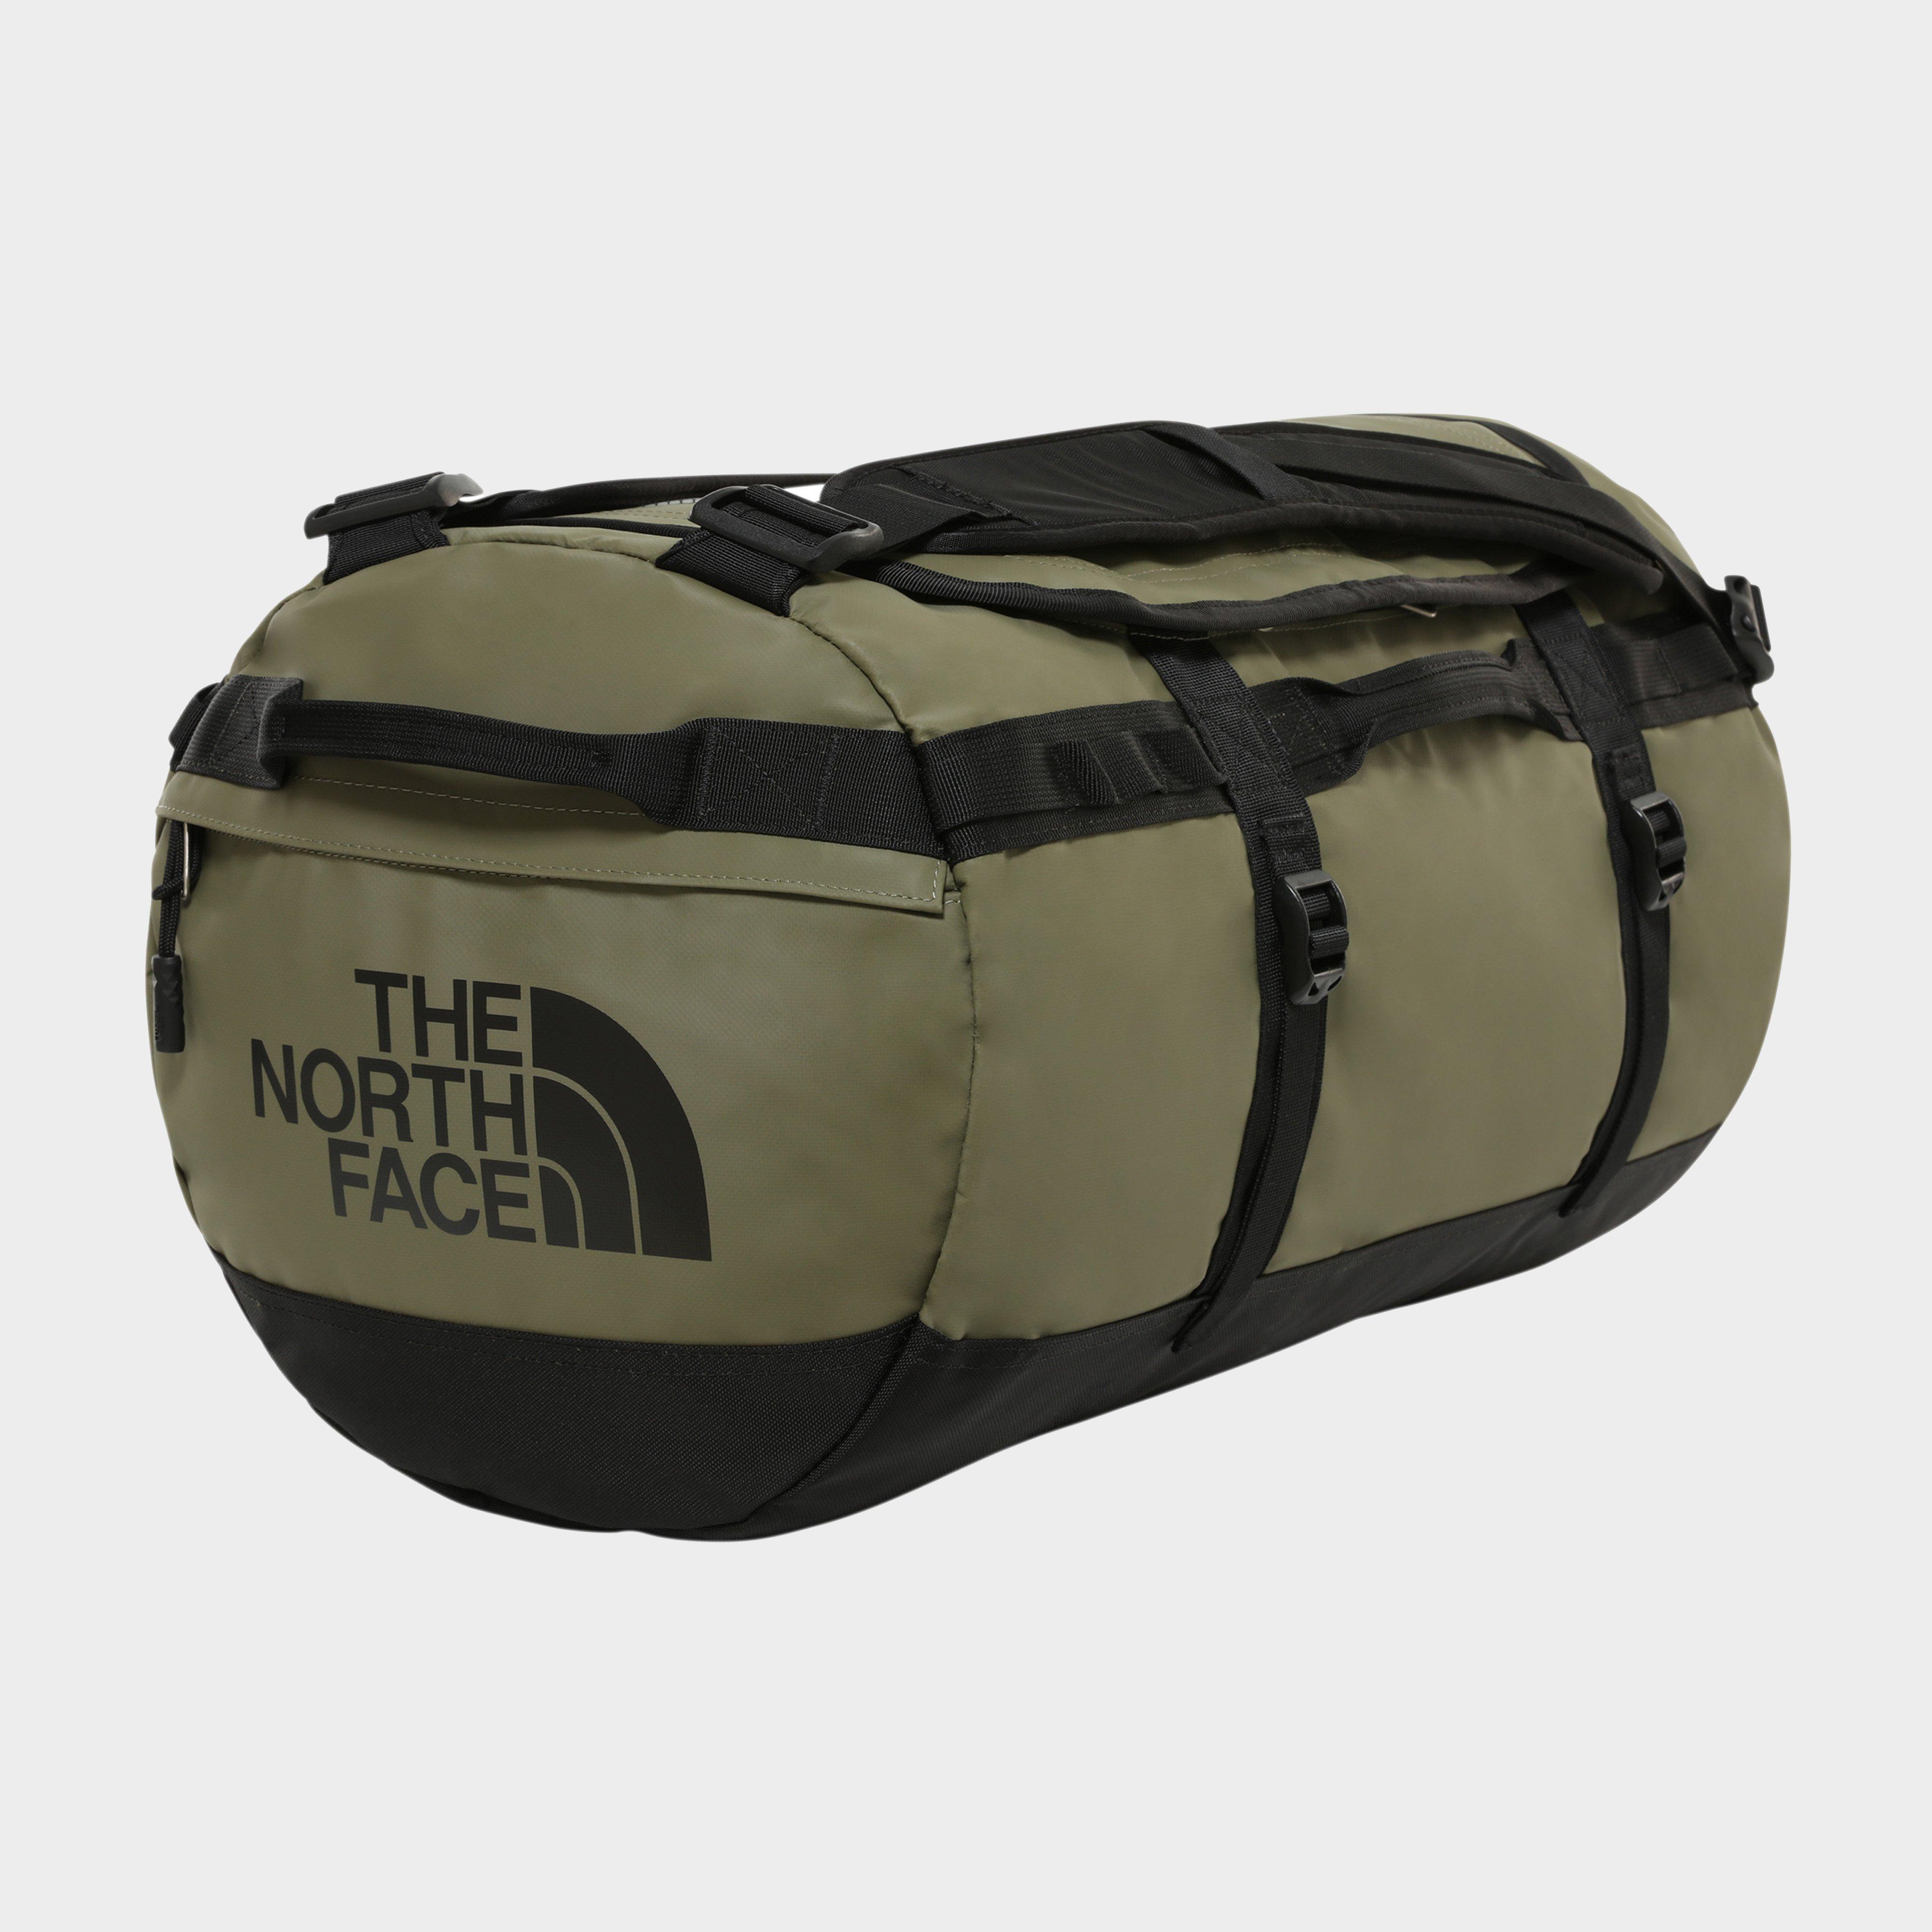 The North Face Basecamp Duffel Bag Small Blacks